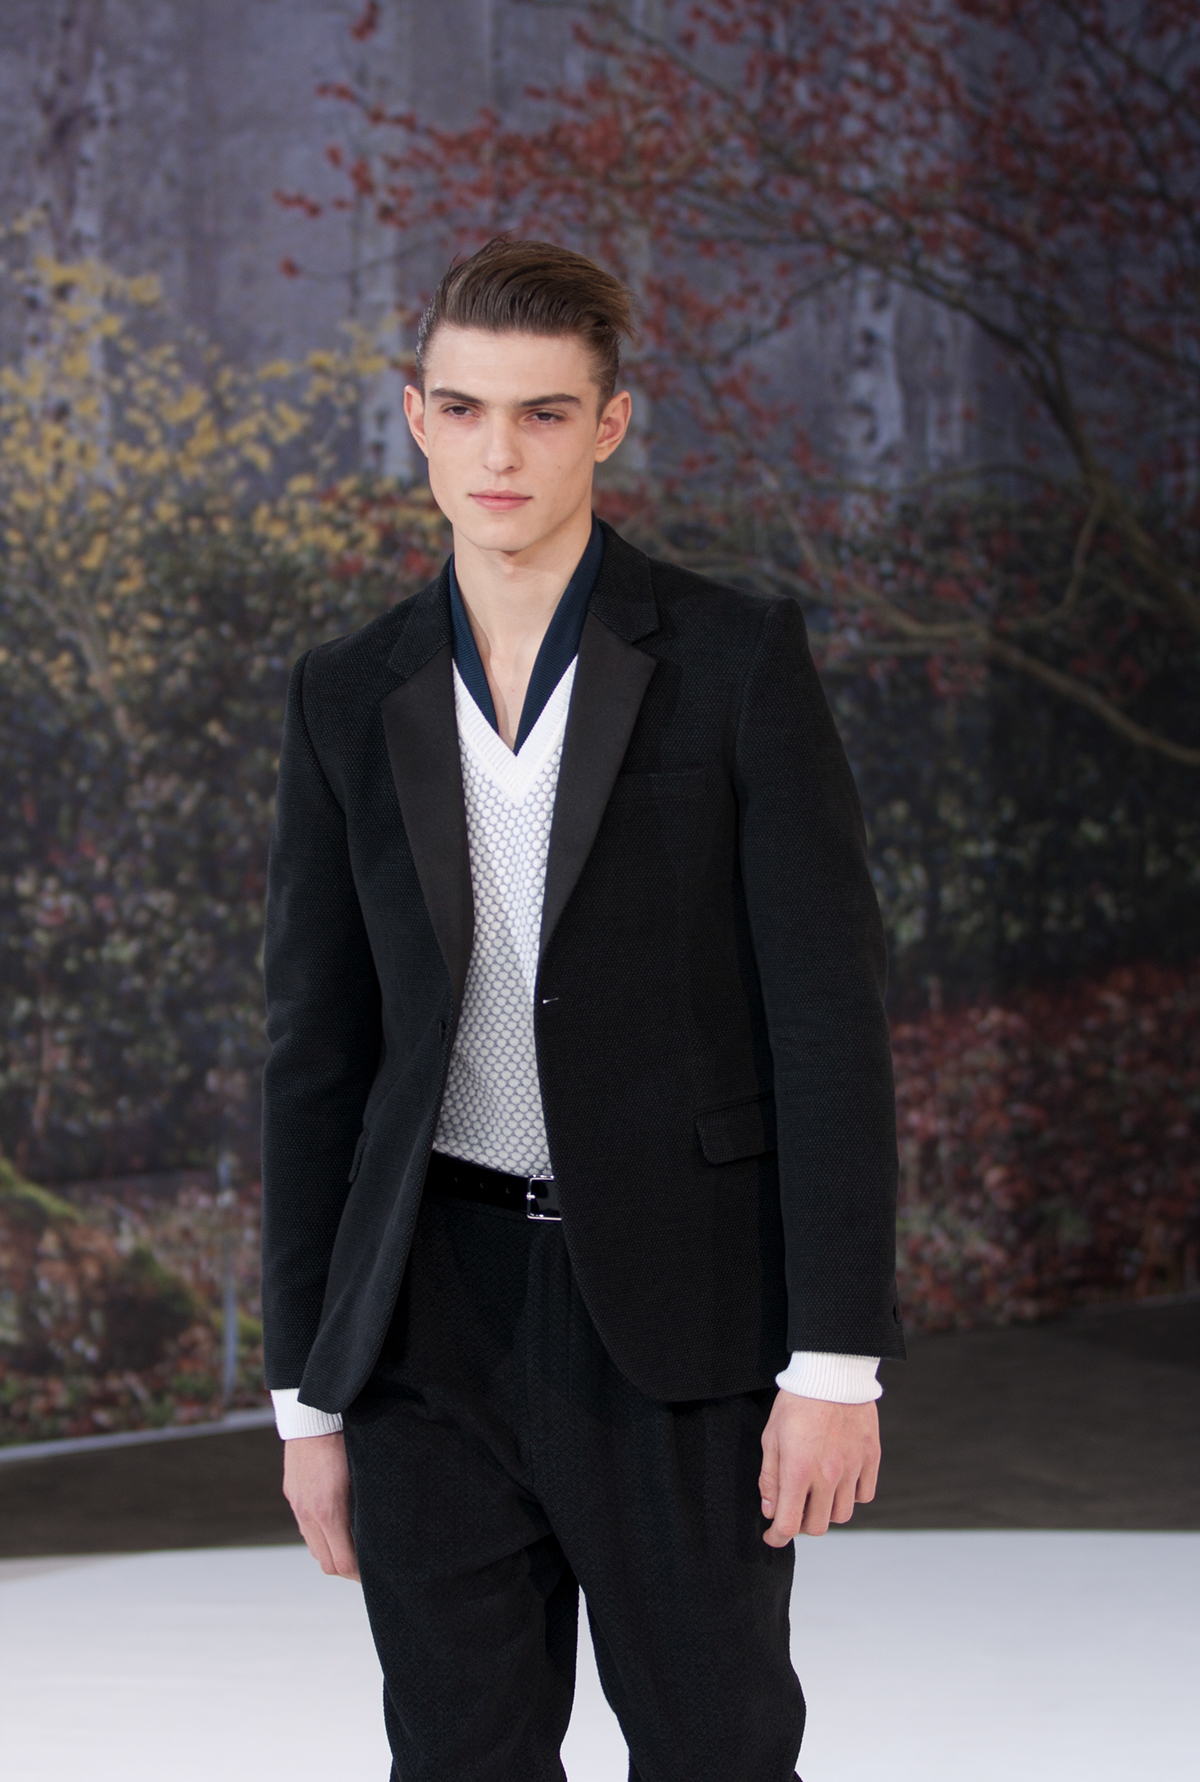 Paris melinda gloss catwalk runway model male model Men Fashion men fashion week